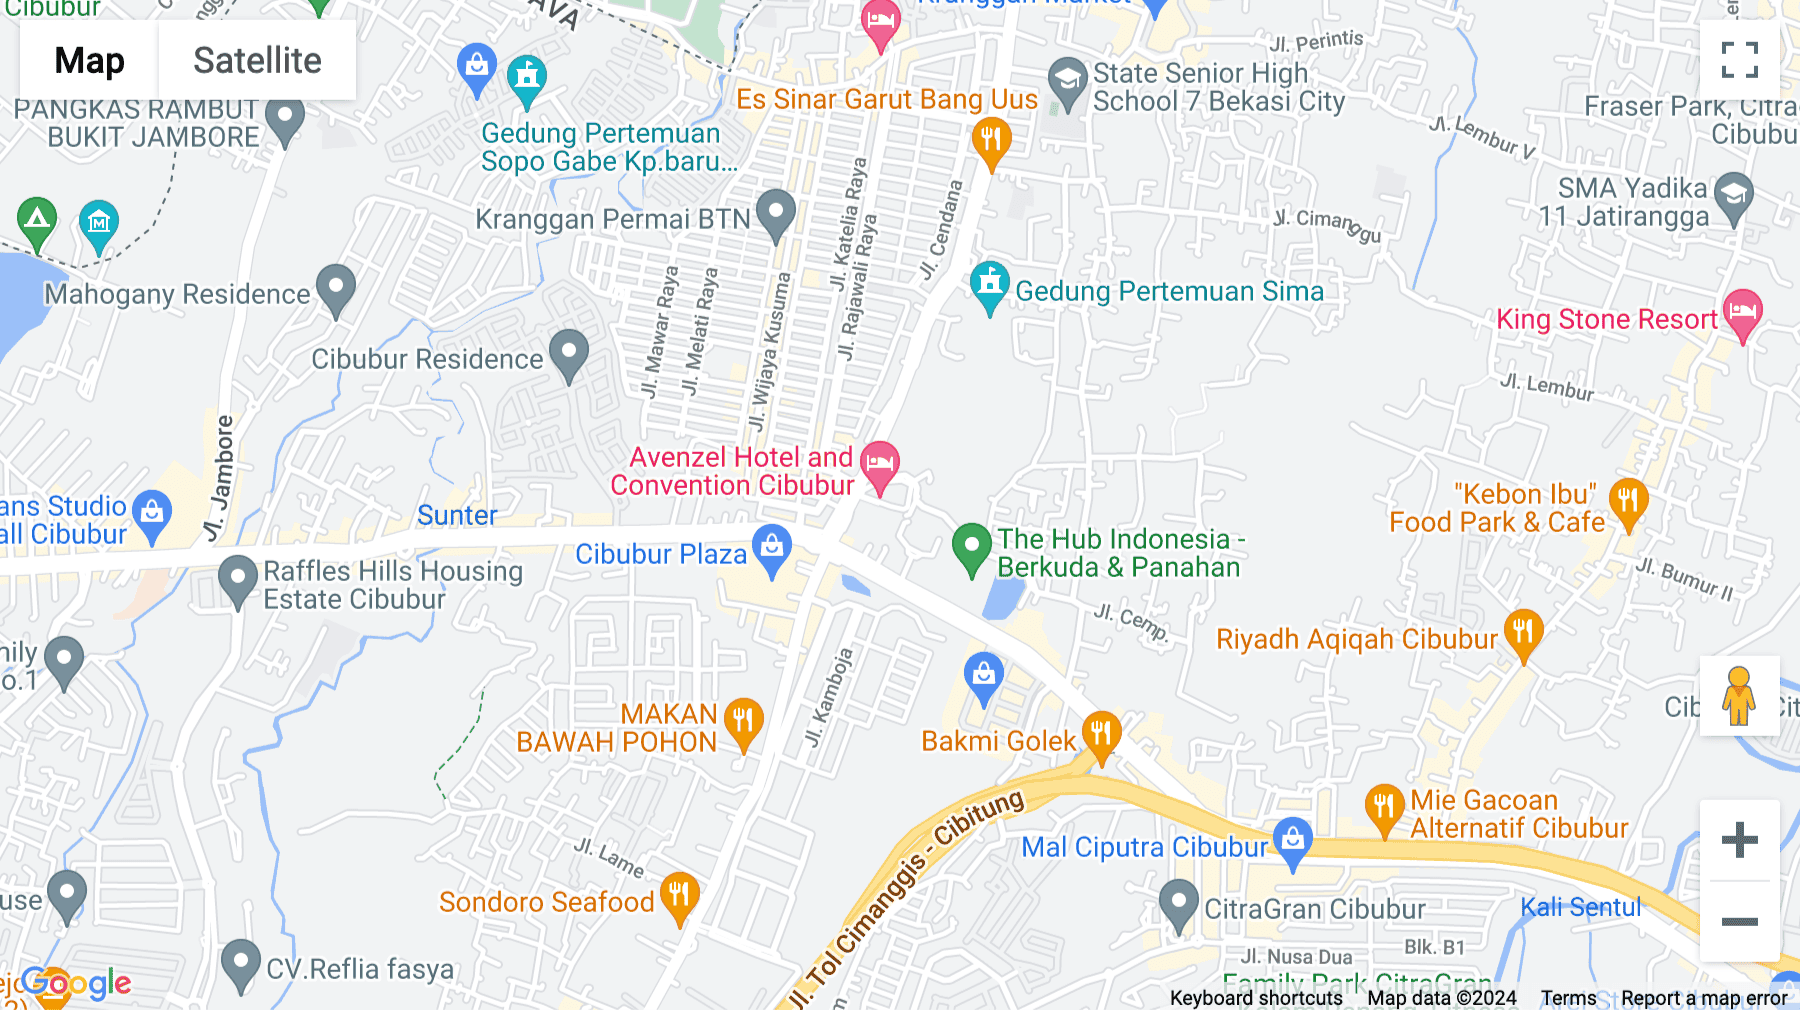 Click for interative map of Mensana Tower Level 5 (Hotel Avenzel), Jl. Raya Kranggan Pondok Gede, Jatisampurna, Bekasi, Jakarta